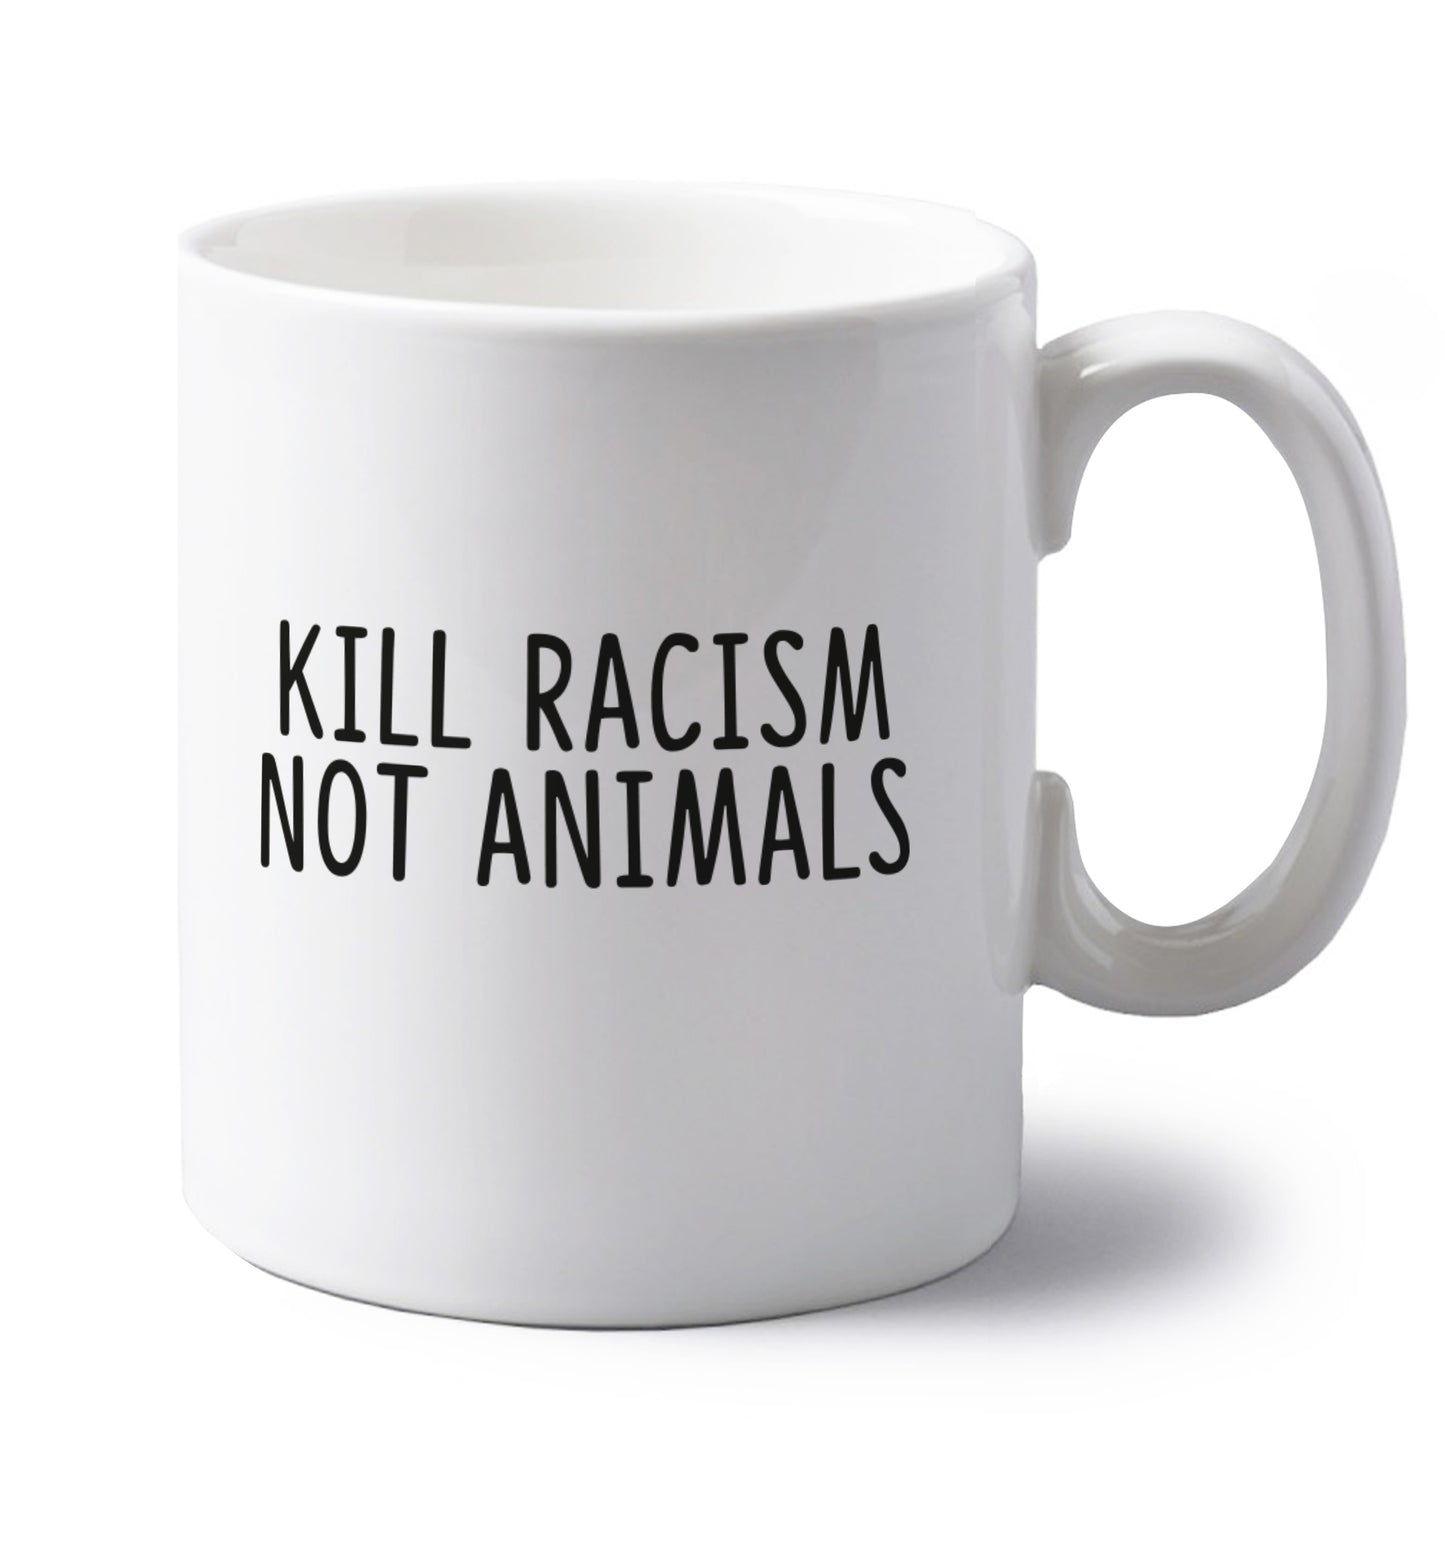 Kill Racism Not Animals left handed white ceramic mug 